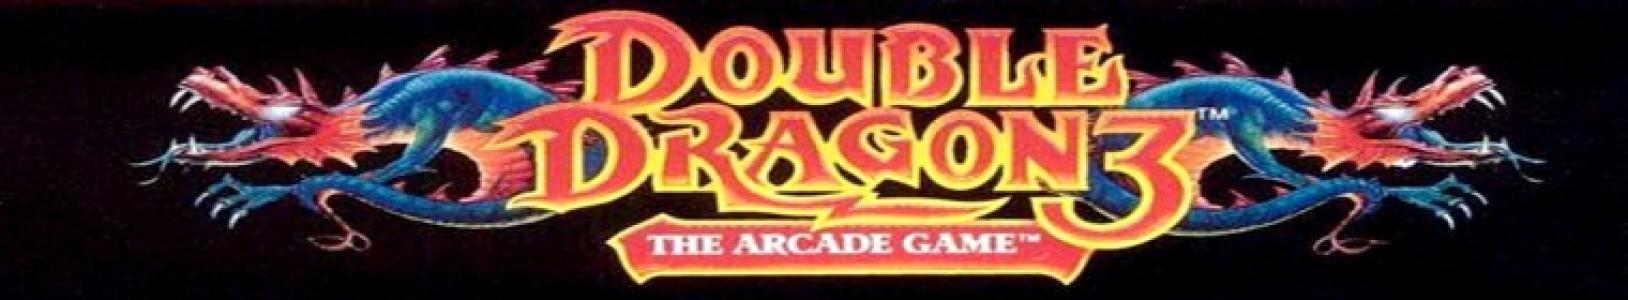 Double Dragon 3: The Arcade Game banner